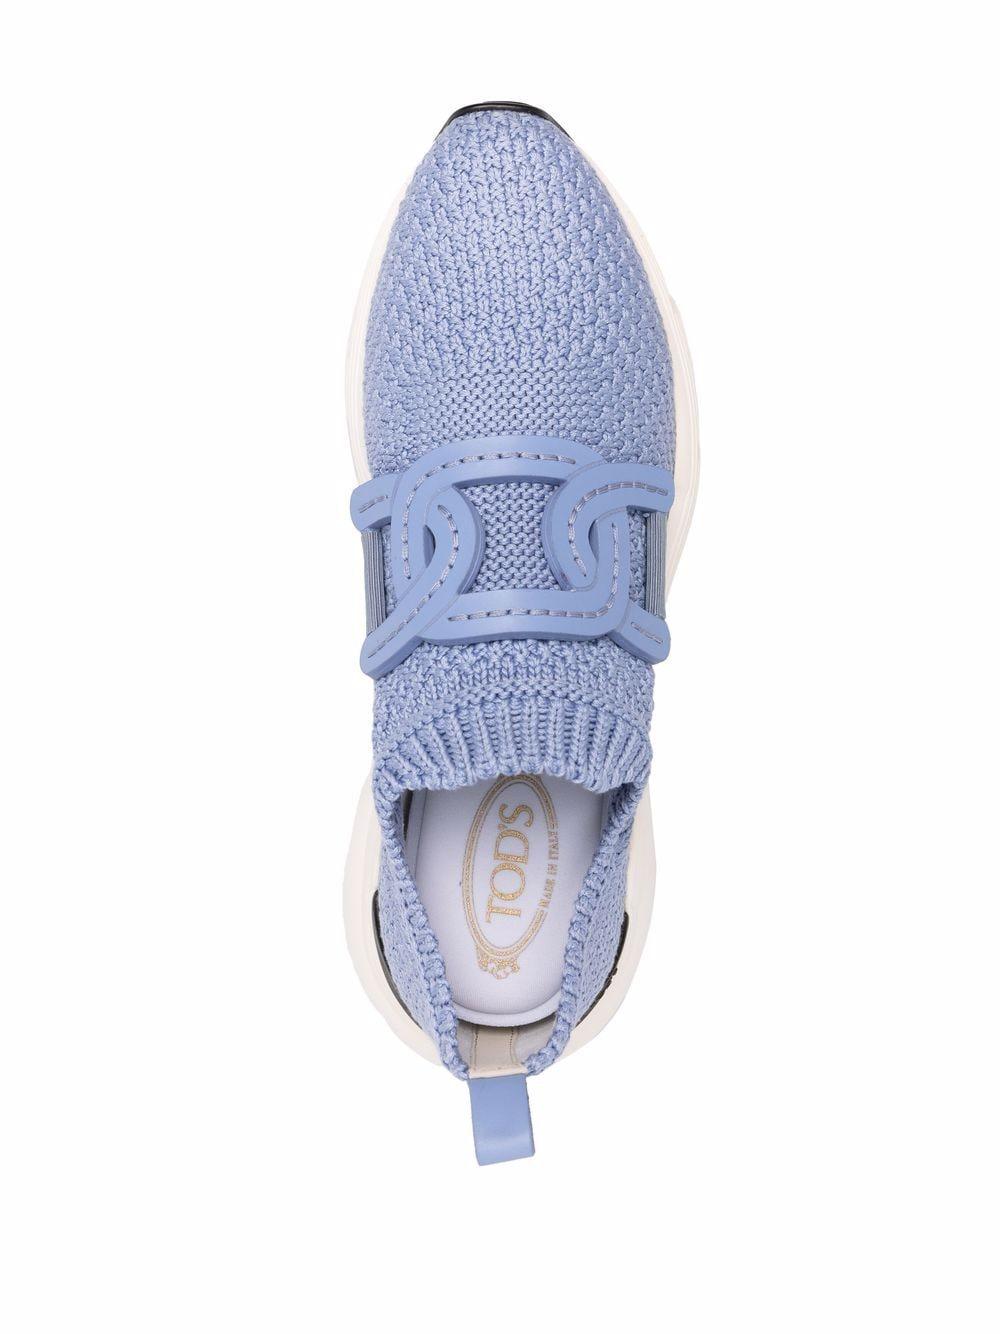 Tod's Slip-on Knit Sneakers in Blue | Lyst